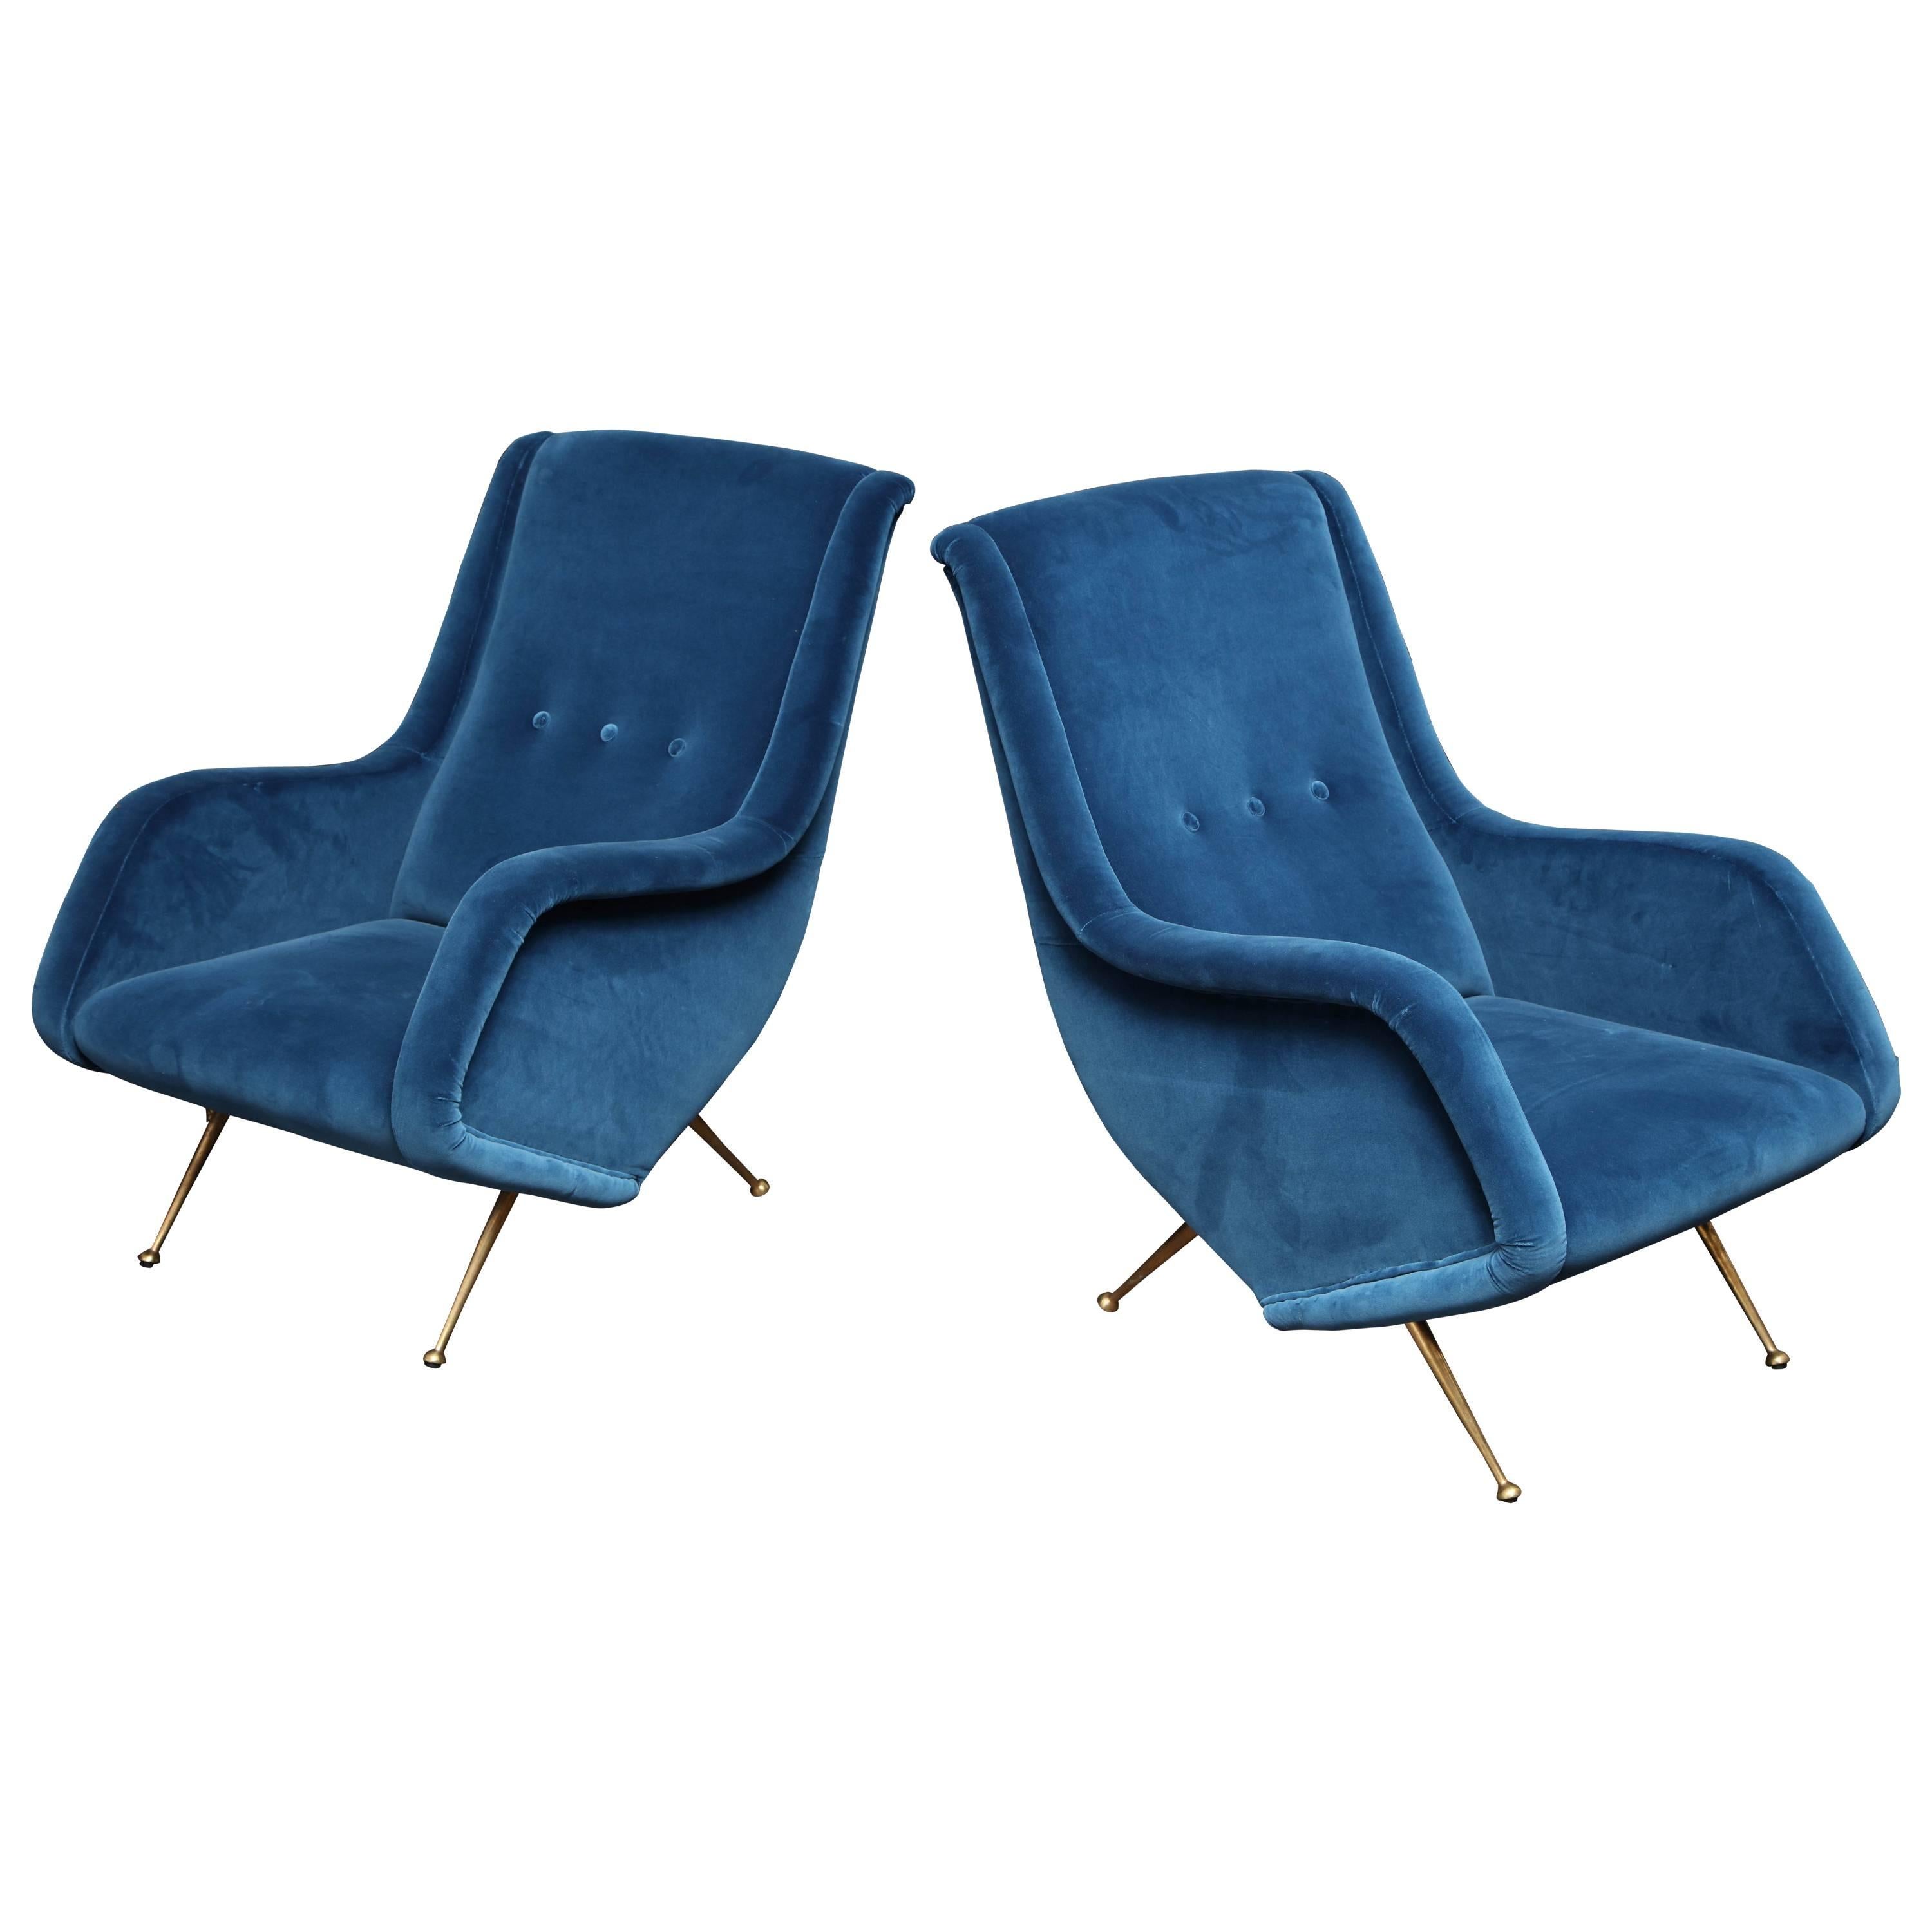 Pair of Parisi Vintage Italian Club Chairs Upholstered in Teal Blue Velvet